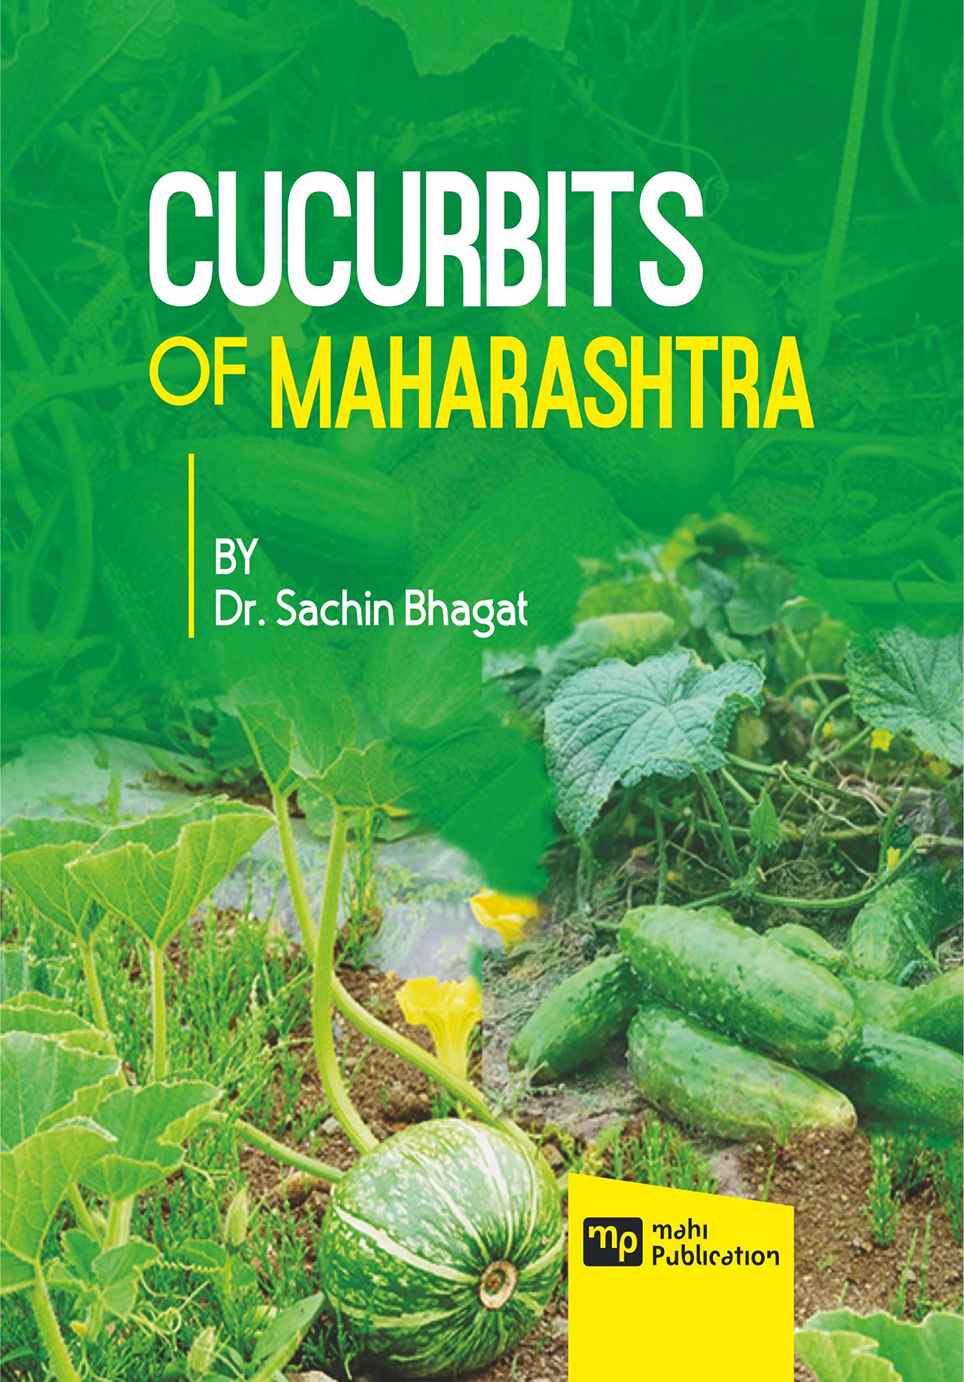 Cucurbits of Maharashtra